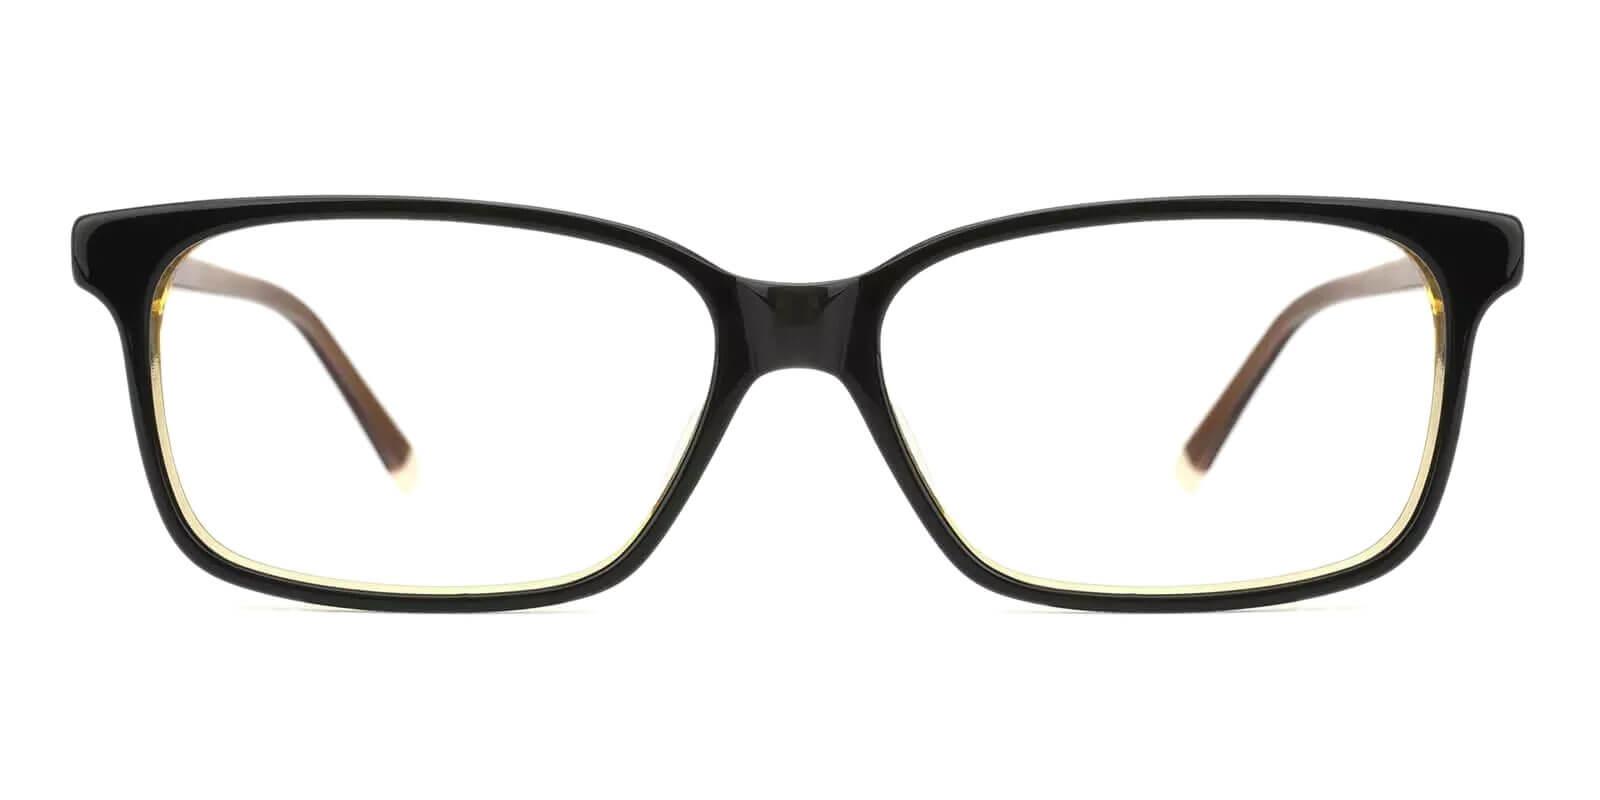 Lochloosa Brown Acetate Eyeglasses , SpringHinges , UniversalBridgeFit Frames from ABBE Glasses